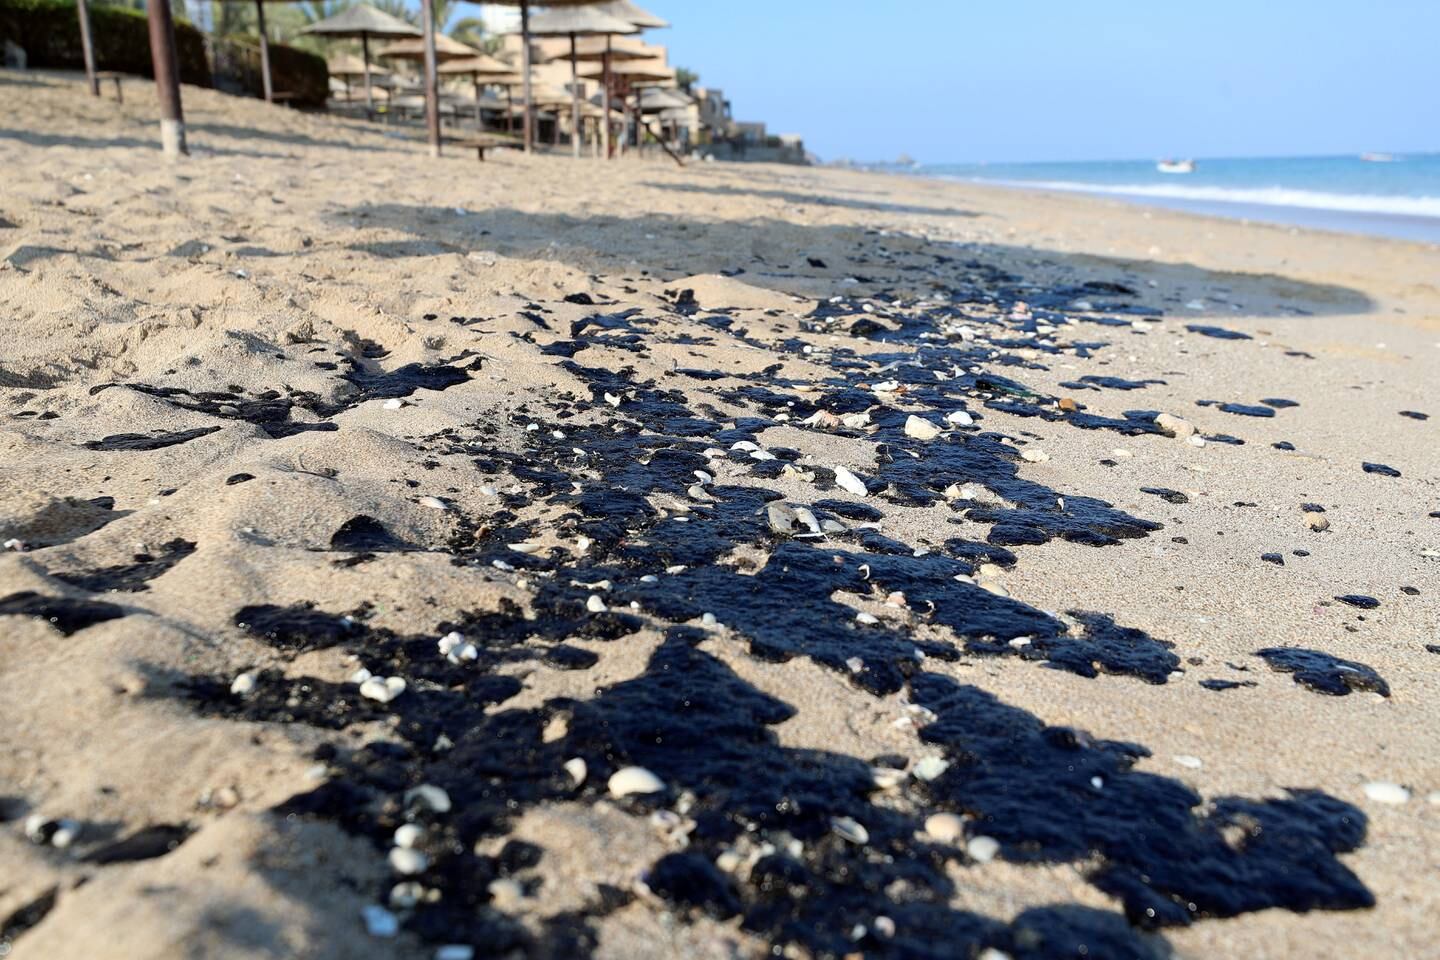 Fujairah, United Arab Emirates - November 02, 2019: Oil has washed up on a beach in Fujairah. Monday the 4th of November 2019. Fujairah. Chris Whiteoak / The National